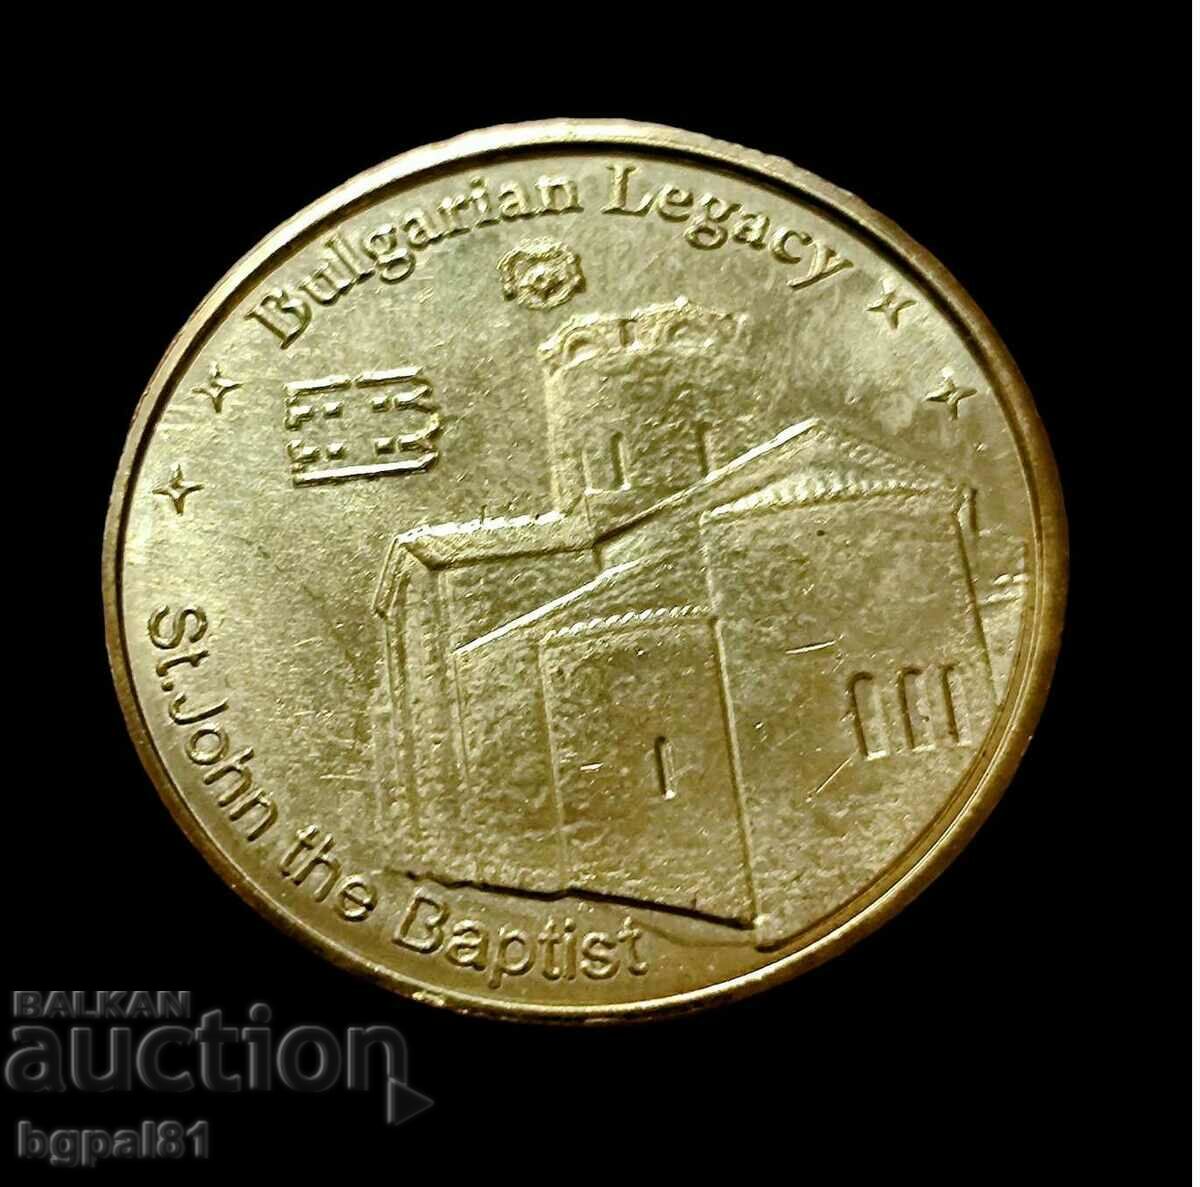 Saint John the Baptist Ness - "Bulgarian legacy" medal issue